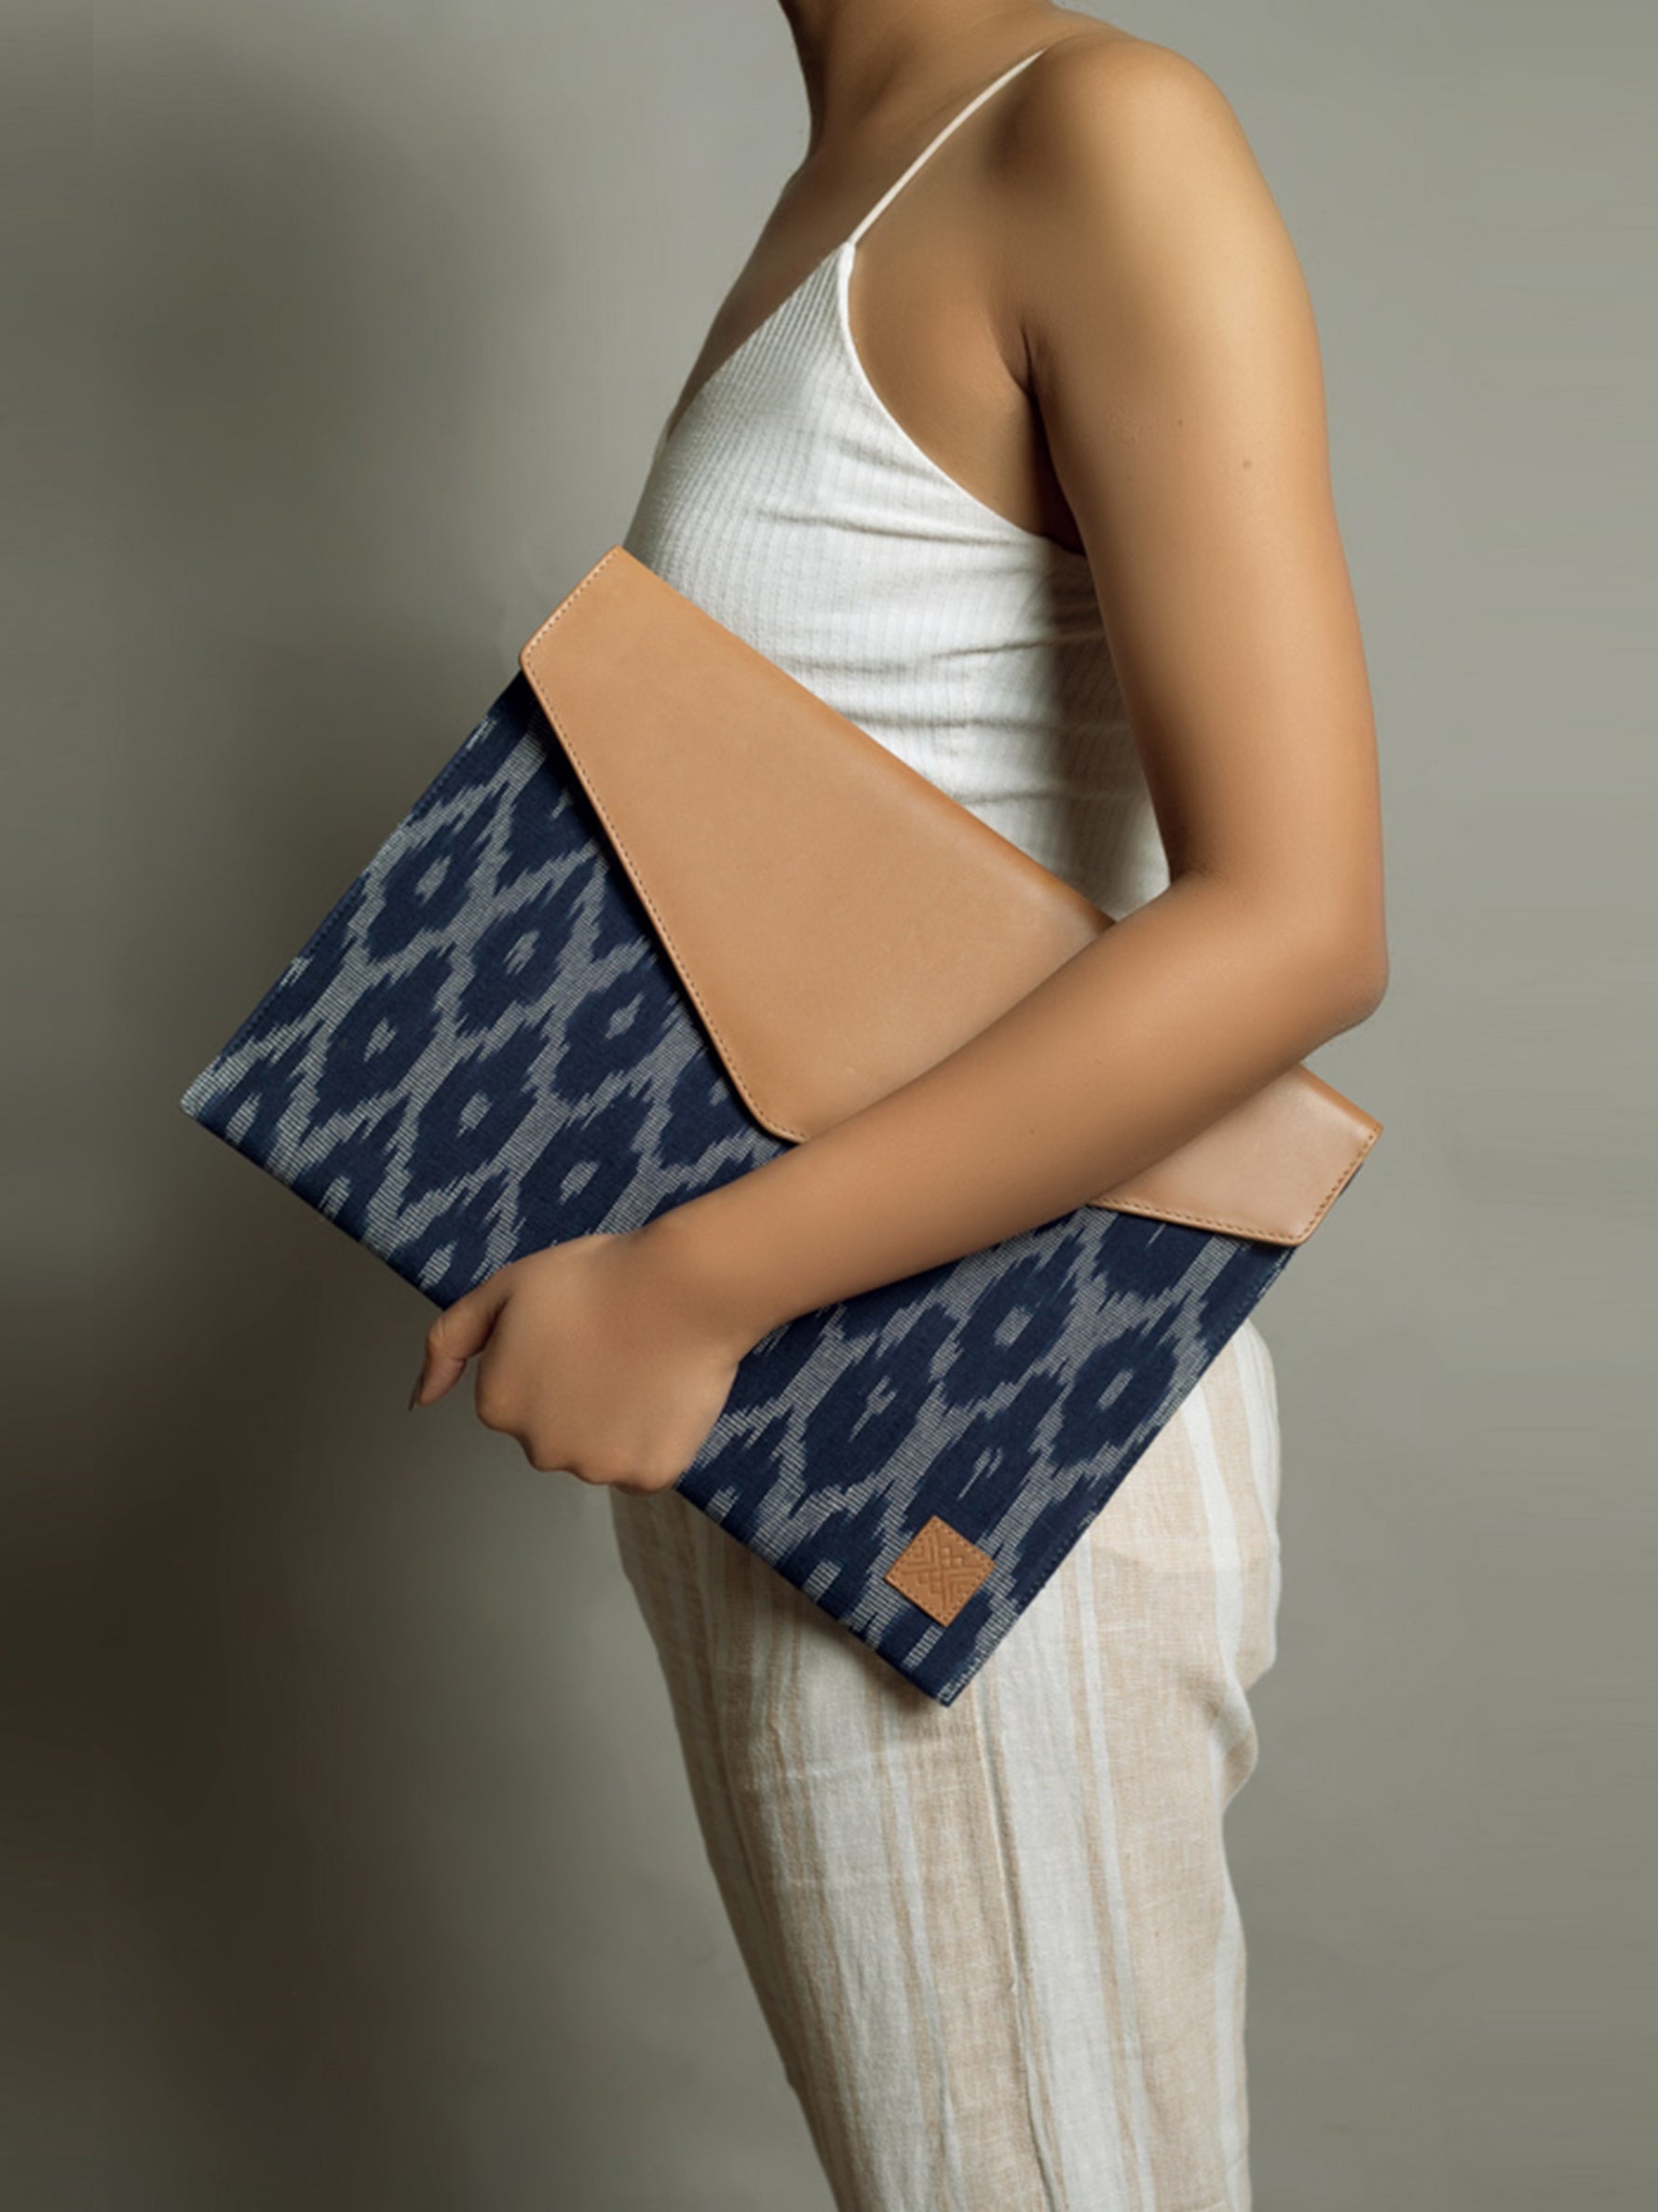 Handcrafted Premium Genuine Vegetable Tanned Leather & Ikat Navy Blue Envelope Laptop Sleeve for Women Tan & Loom